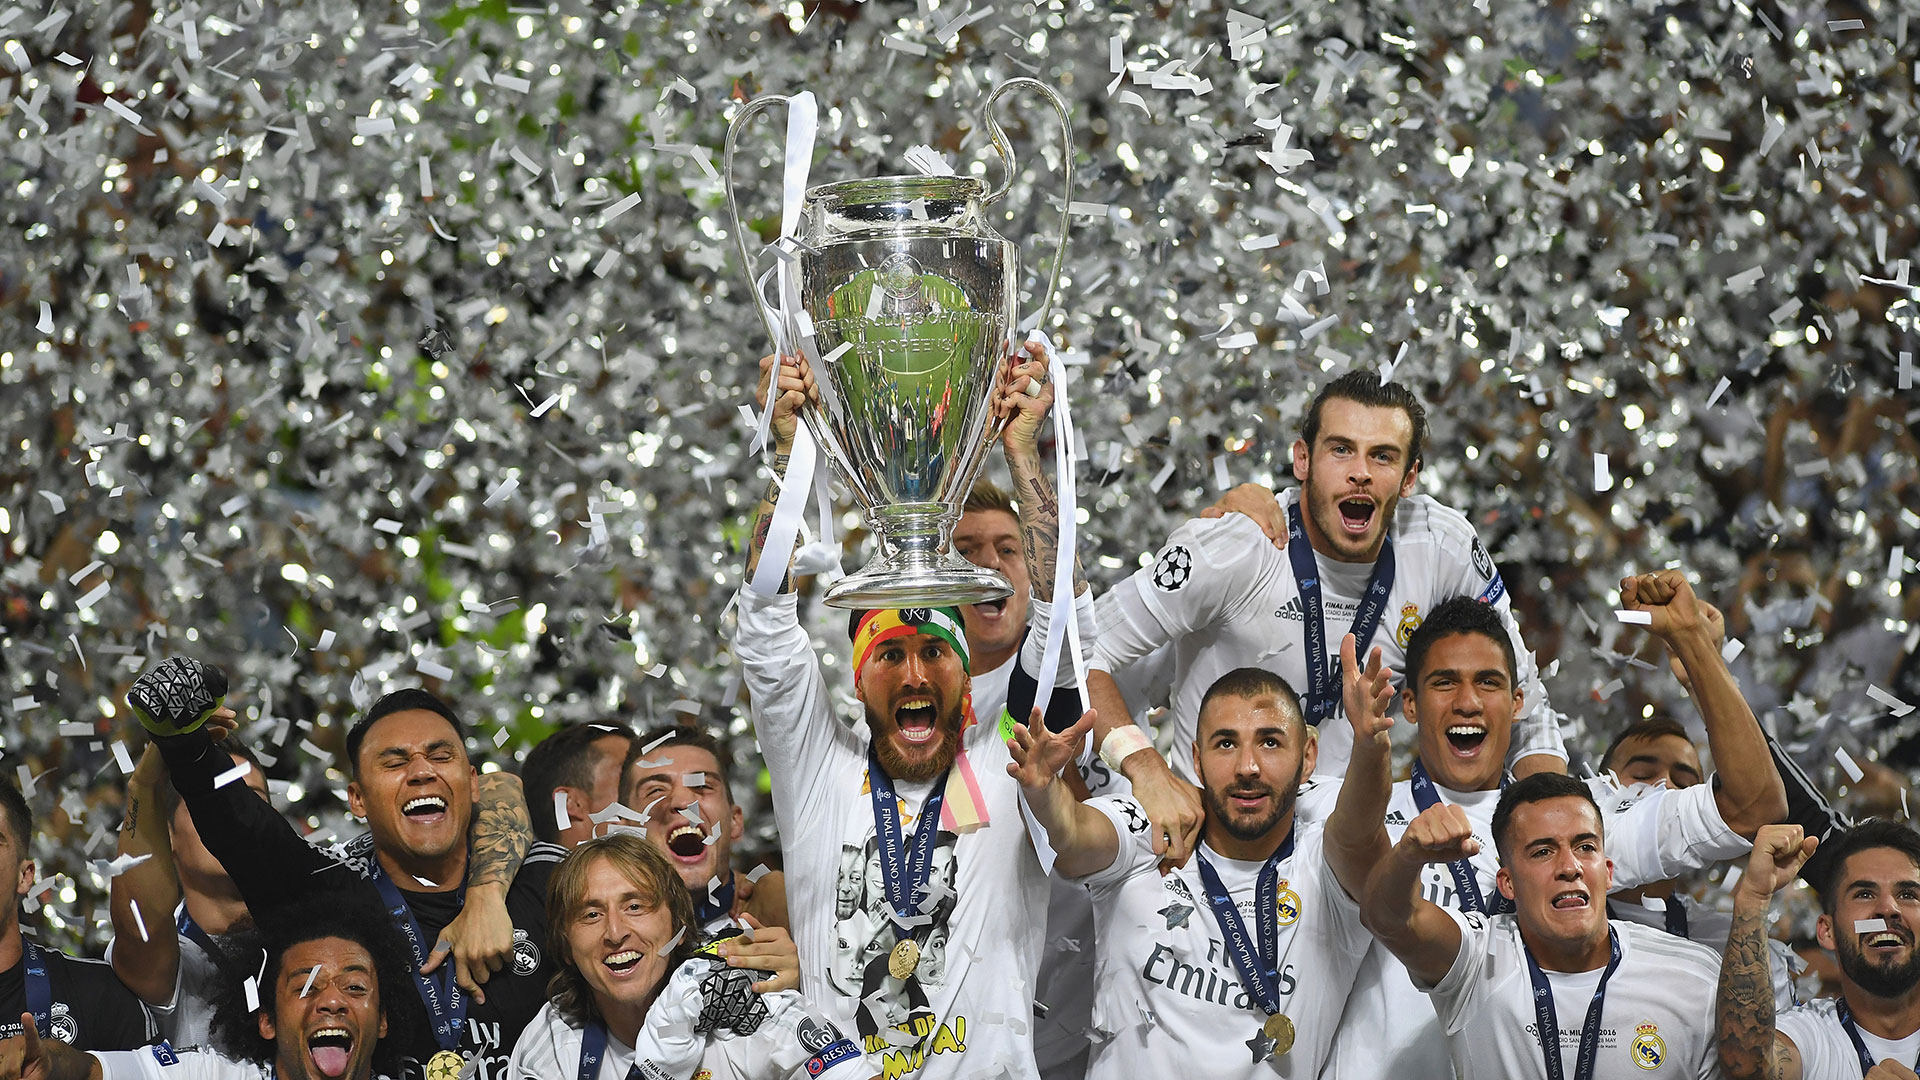 Champions League, says Oliver Kahn 